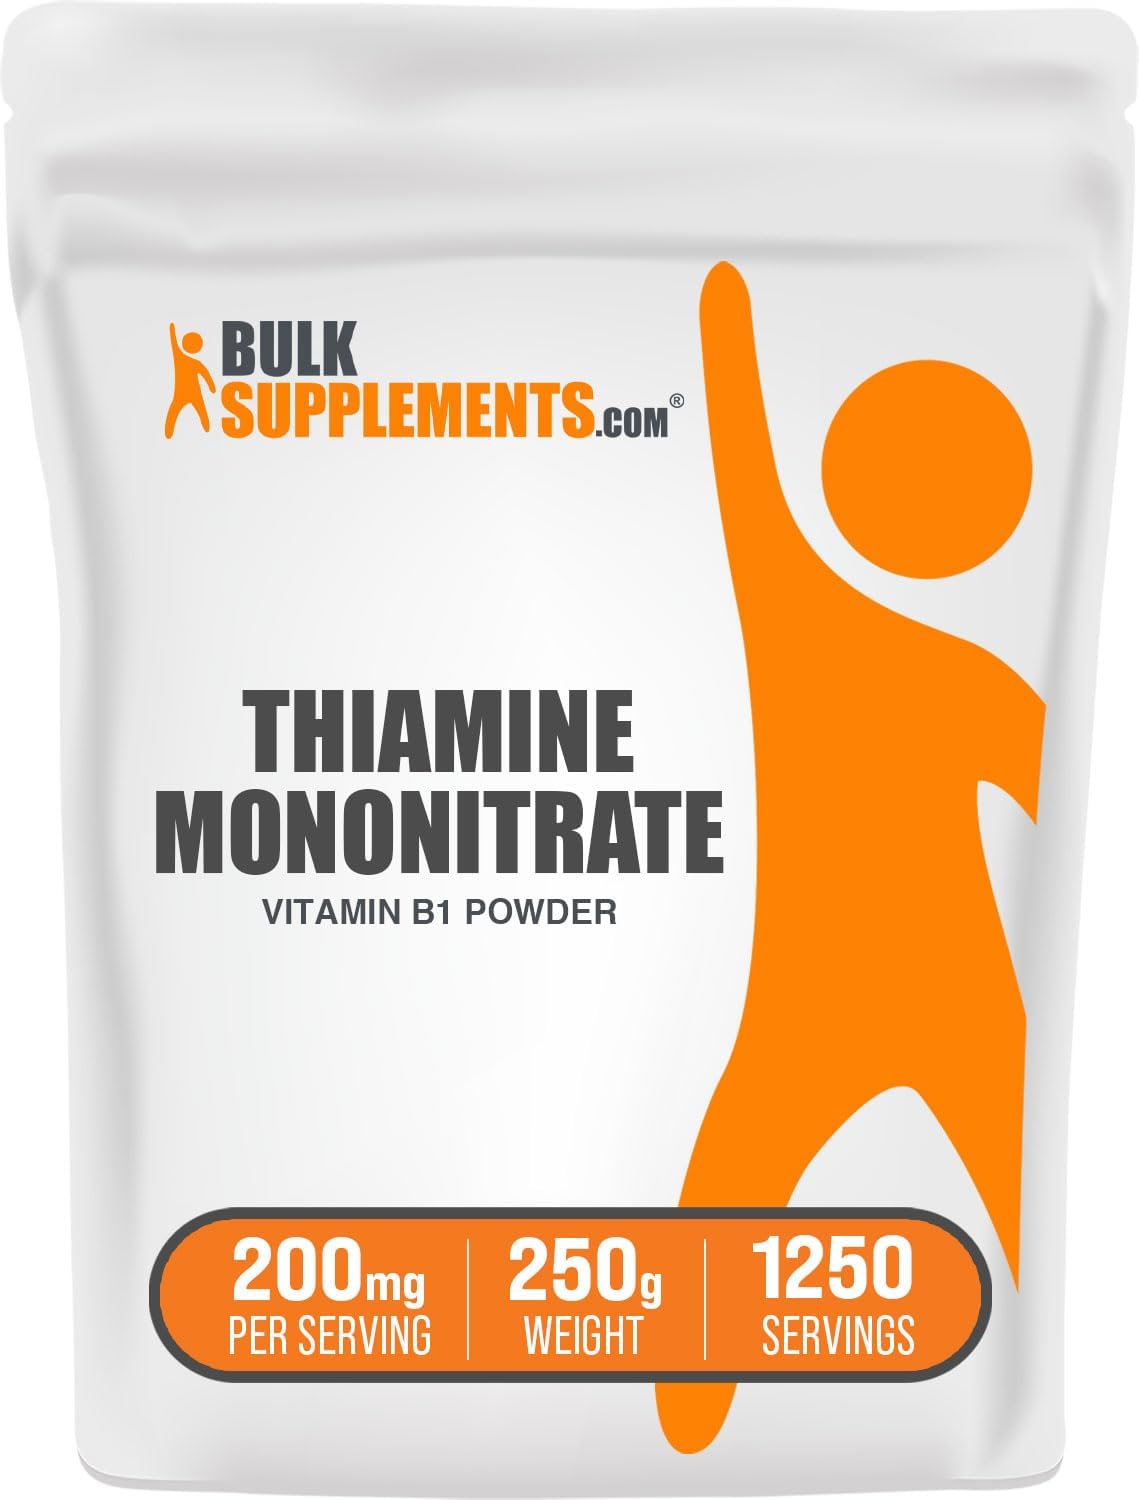 BULKSUPPLEMENTS.COM Thiamine Mononitrate Powder - Vitamin B1 Powder - Thiamine B1 Supplement - Thiamine 200mg - B1 Vitamins - Thiamine Supplement - 200mg per Serving (100 Grams - 3.5 oz)